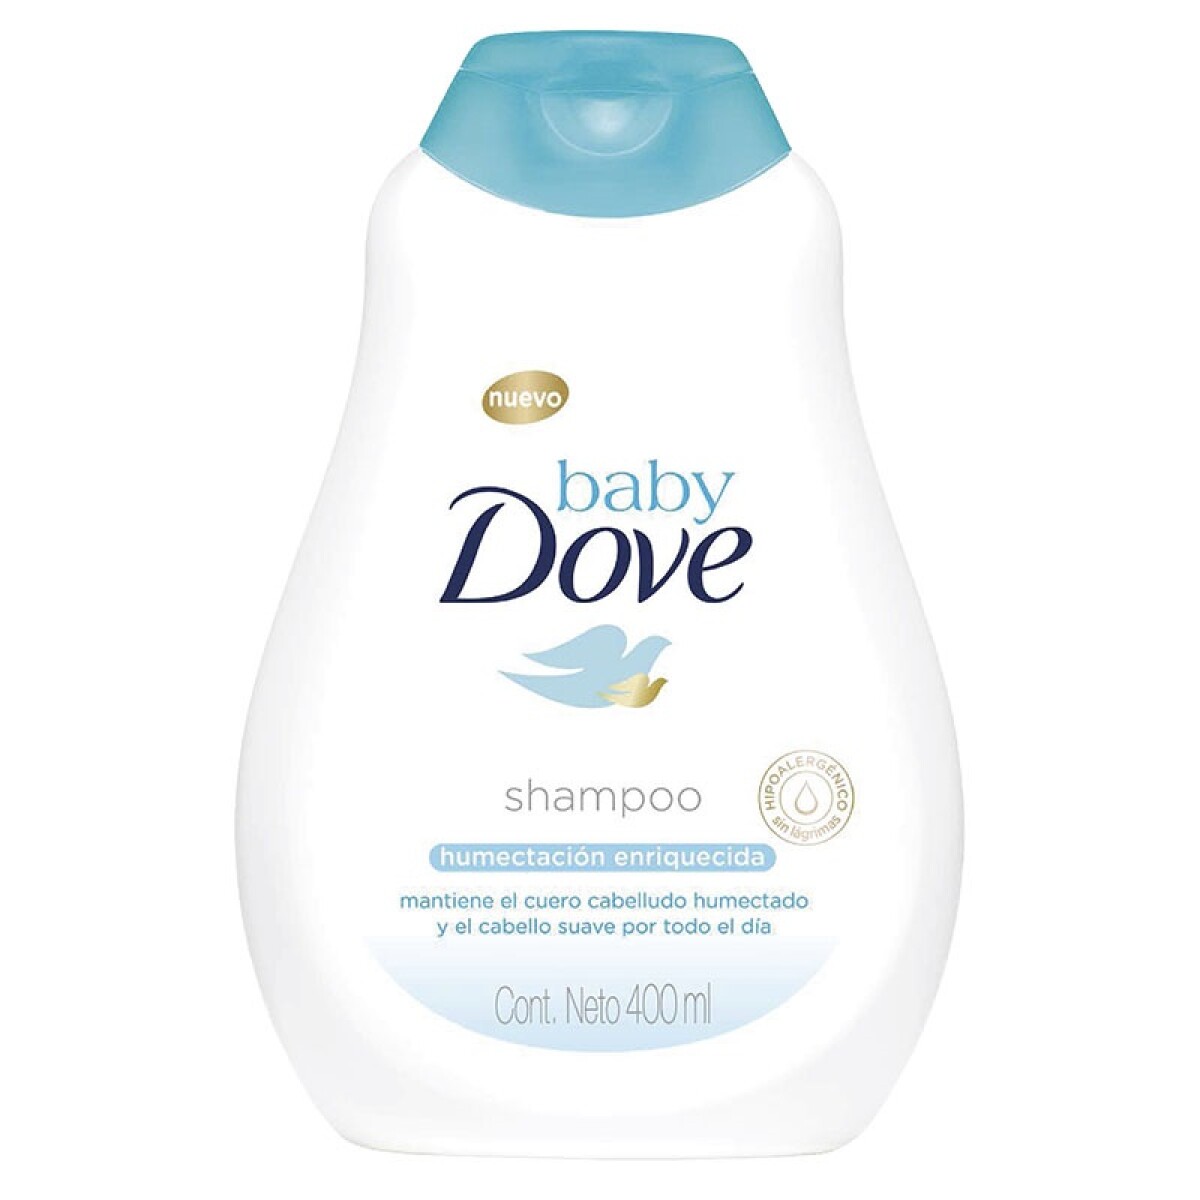 Shampoo dove baby x 400 ml